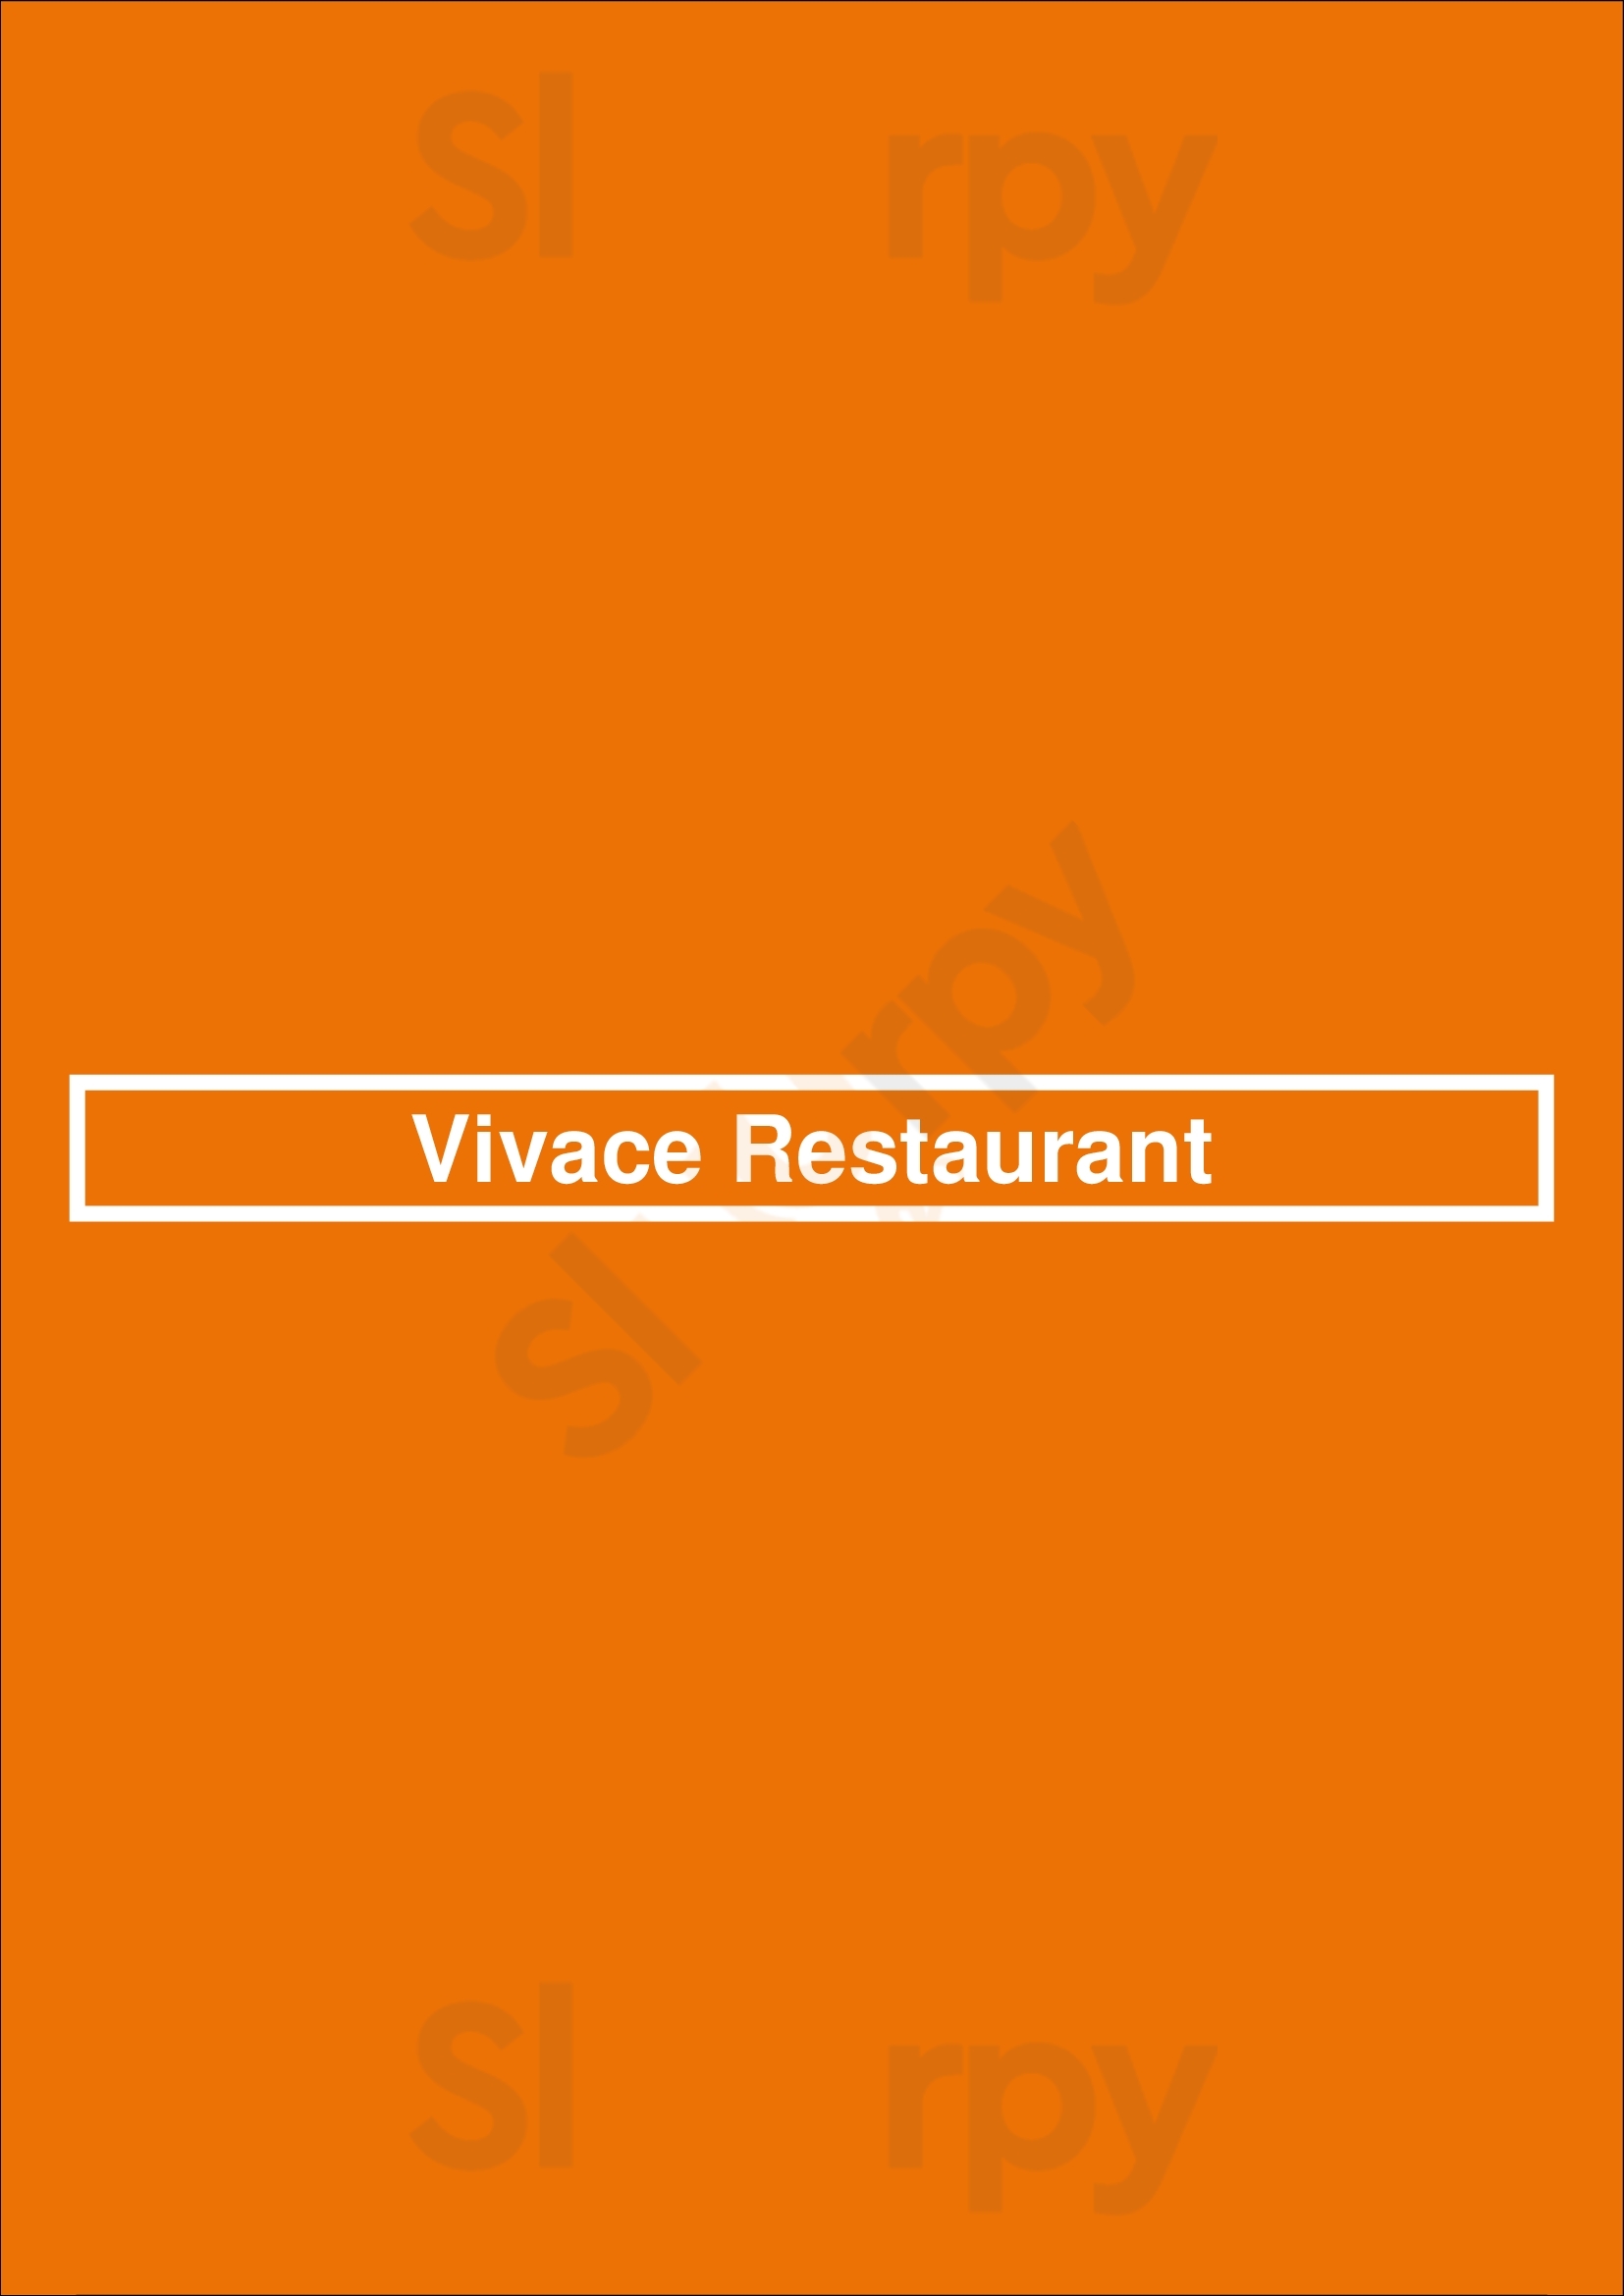 Vivace Restaurant Tucson Menu - 1